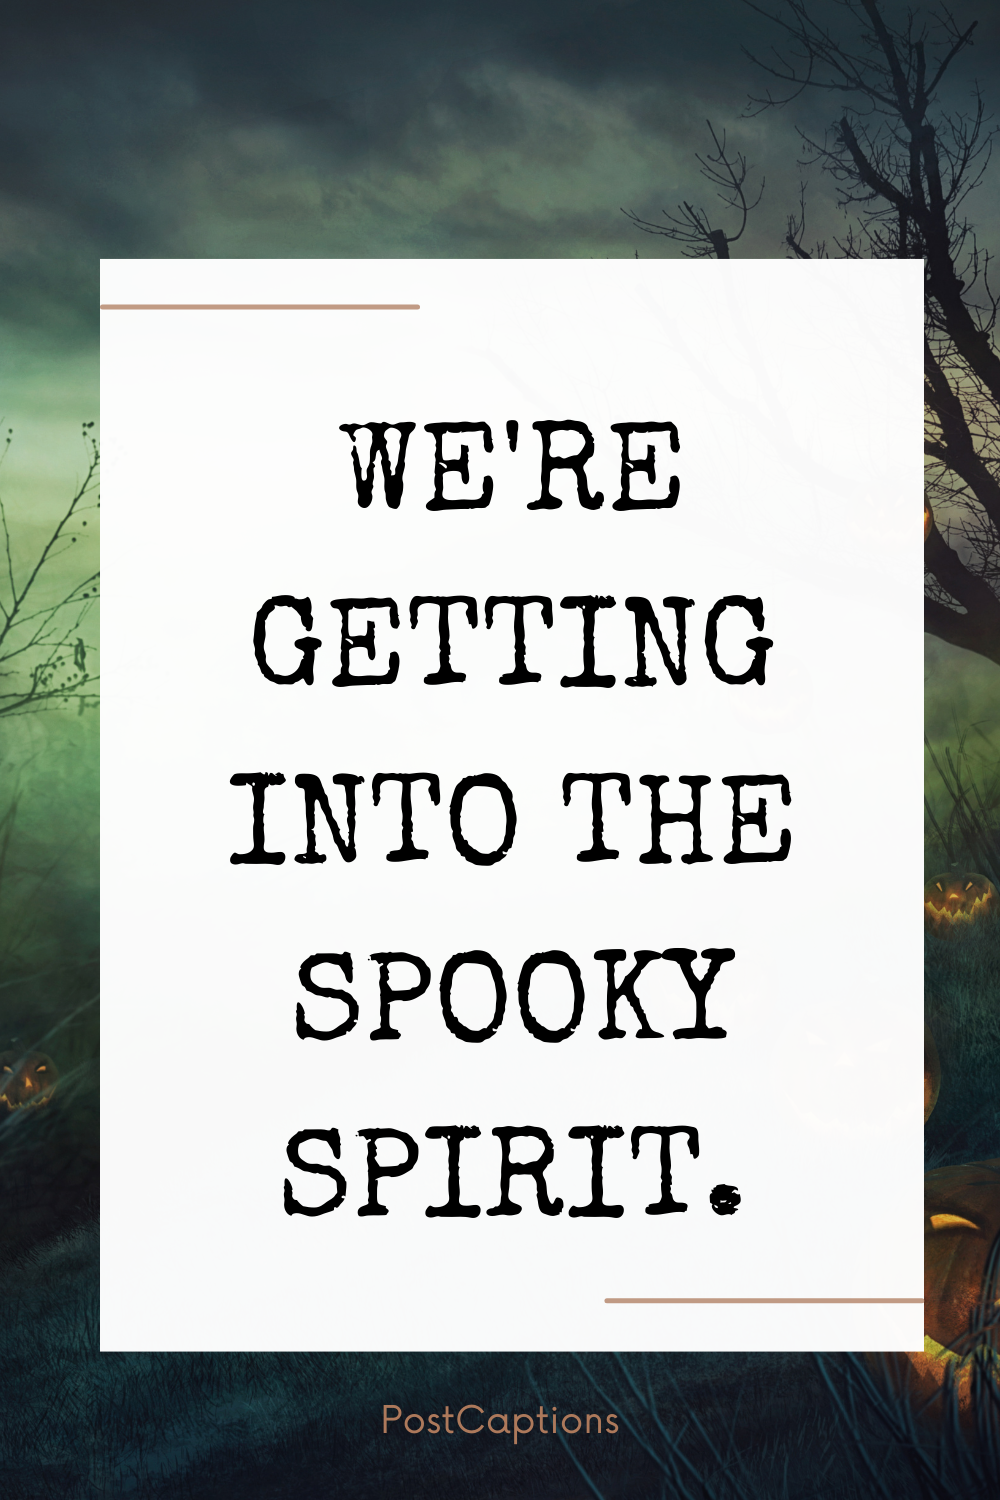 Spooky season Instagram captions